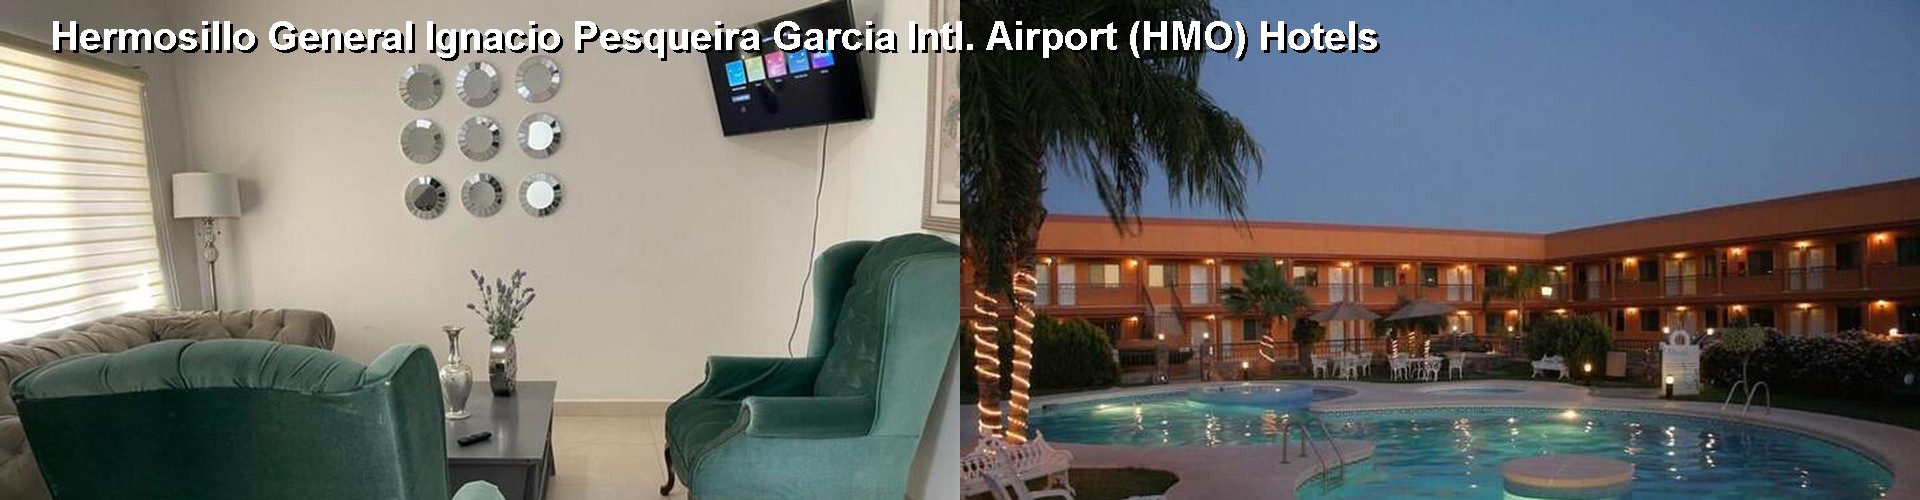 5 Best Hotels near Hermosillo General Ignacio Pesqueira Garcia Intl. Airport (HMO)